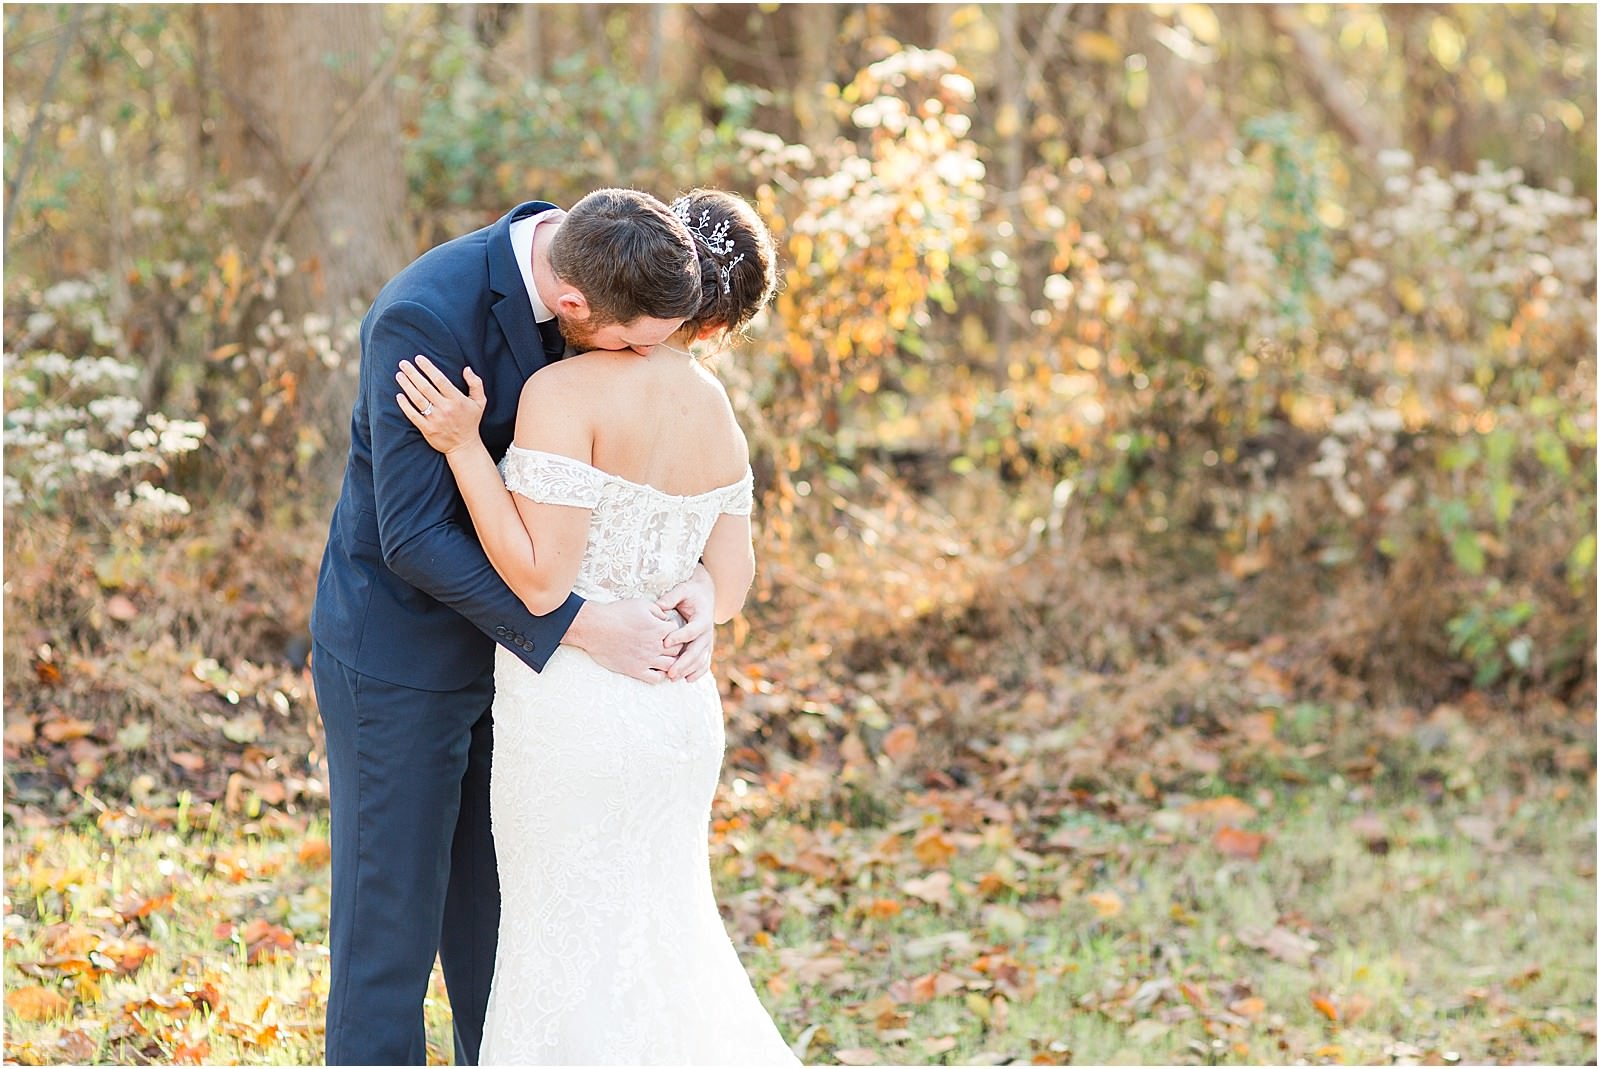 Walker and Alyssa's intimate fall wedding in Southern Indiana. | Wedding Photography | The Corner House Wedding | Southern Indiana Wedding | #fallwedding #intimatewedding | 029.jpg